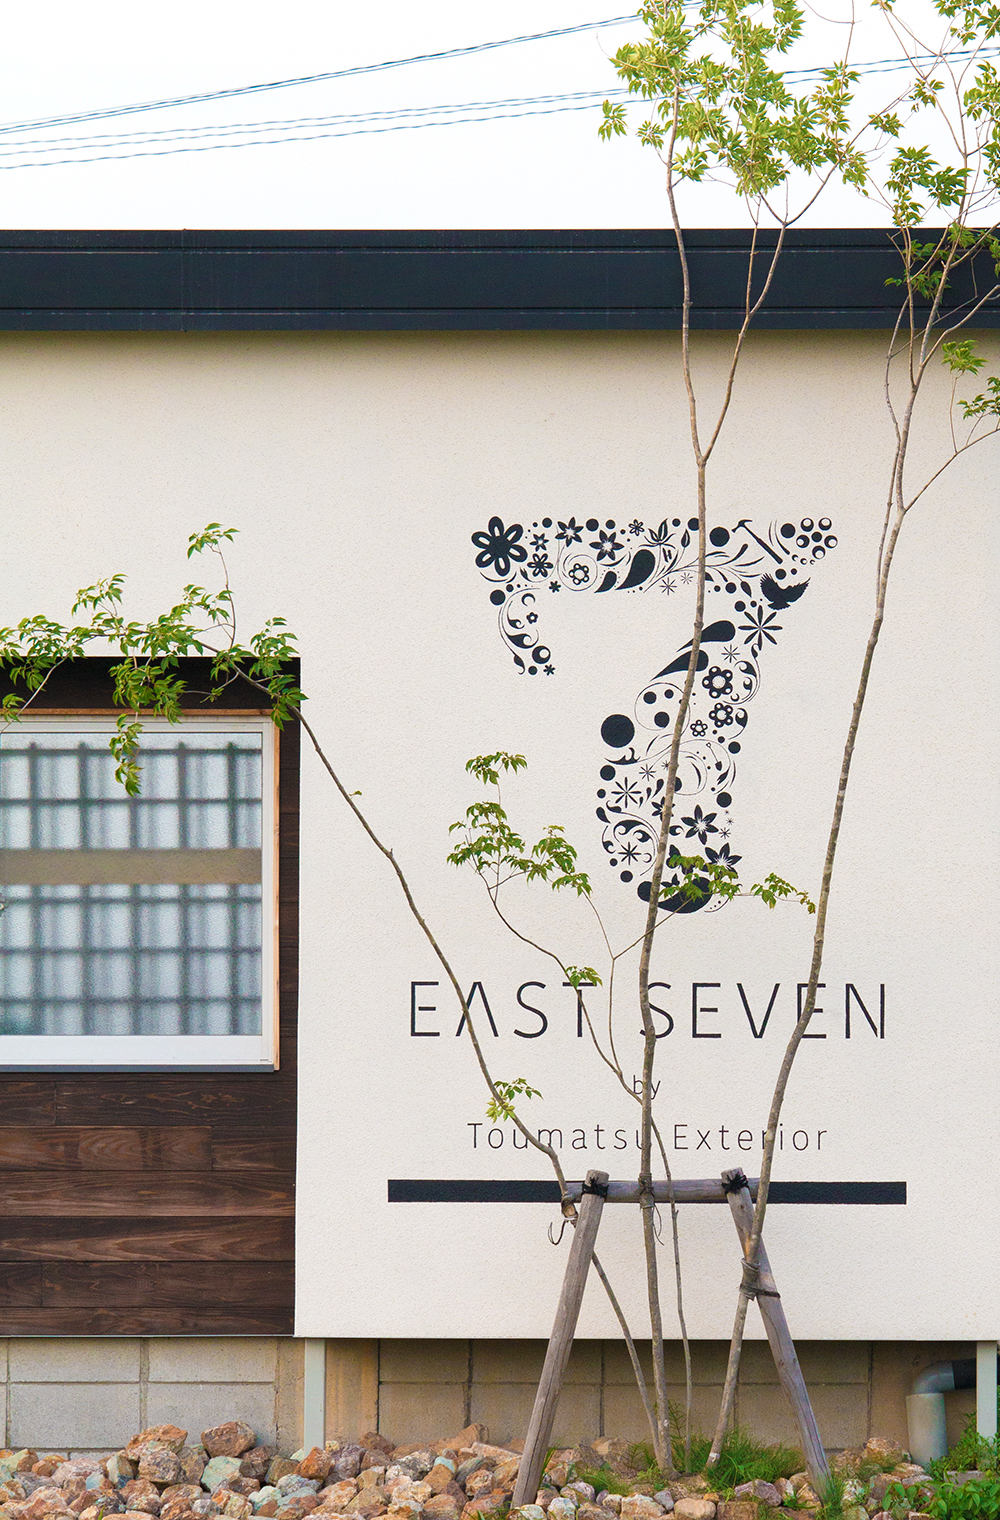 EAST SEVEN 标识设计 ©Disport Design